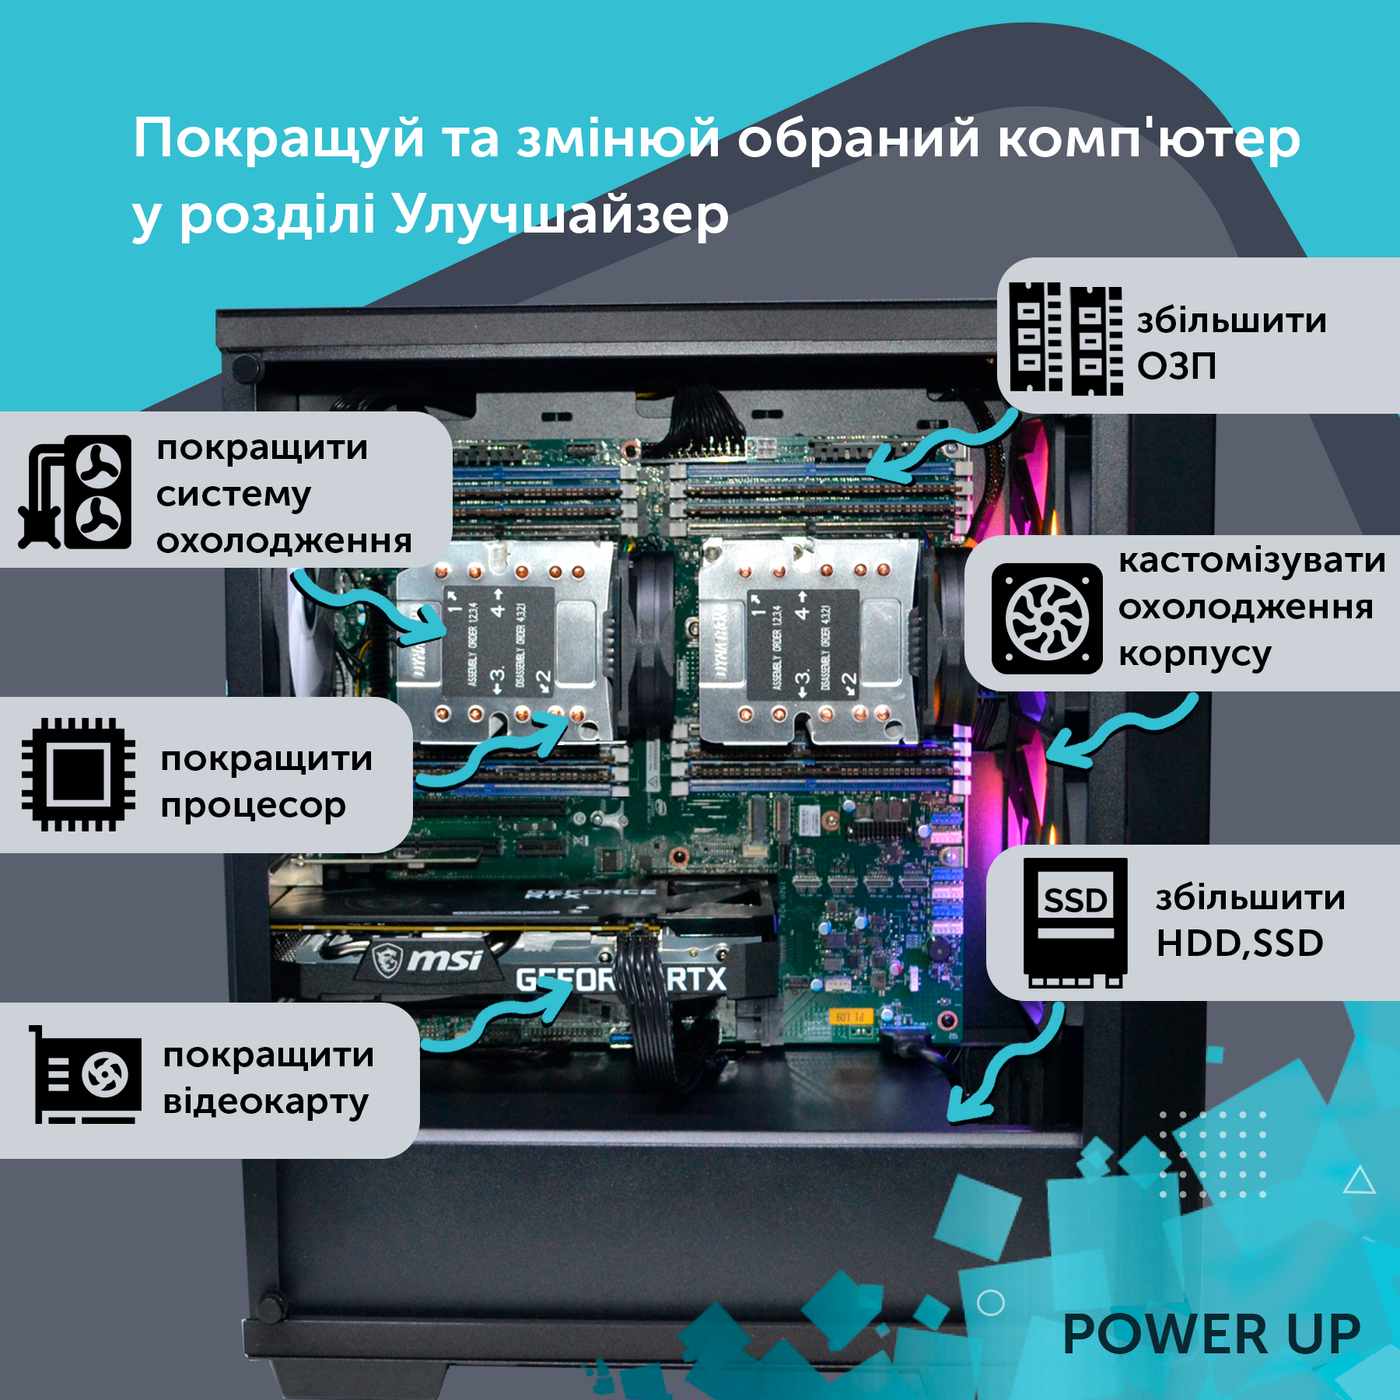 Рабочая станция PowerUp Desktop #355 Core i7 14700K//SSD 1TB/GeForce RTX 4080 Super 16GB